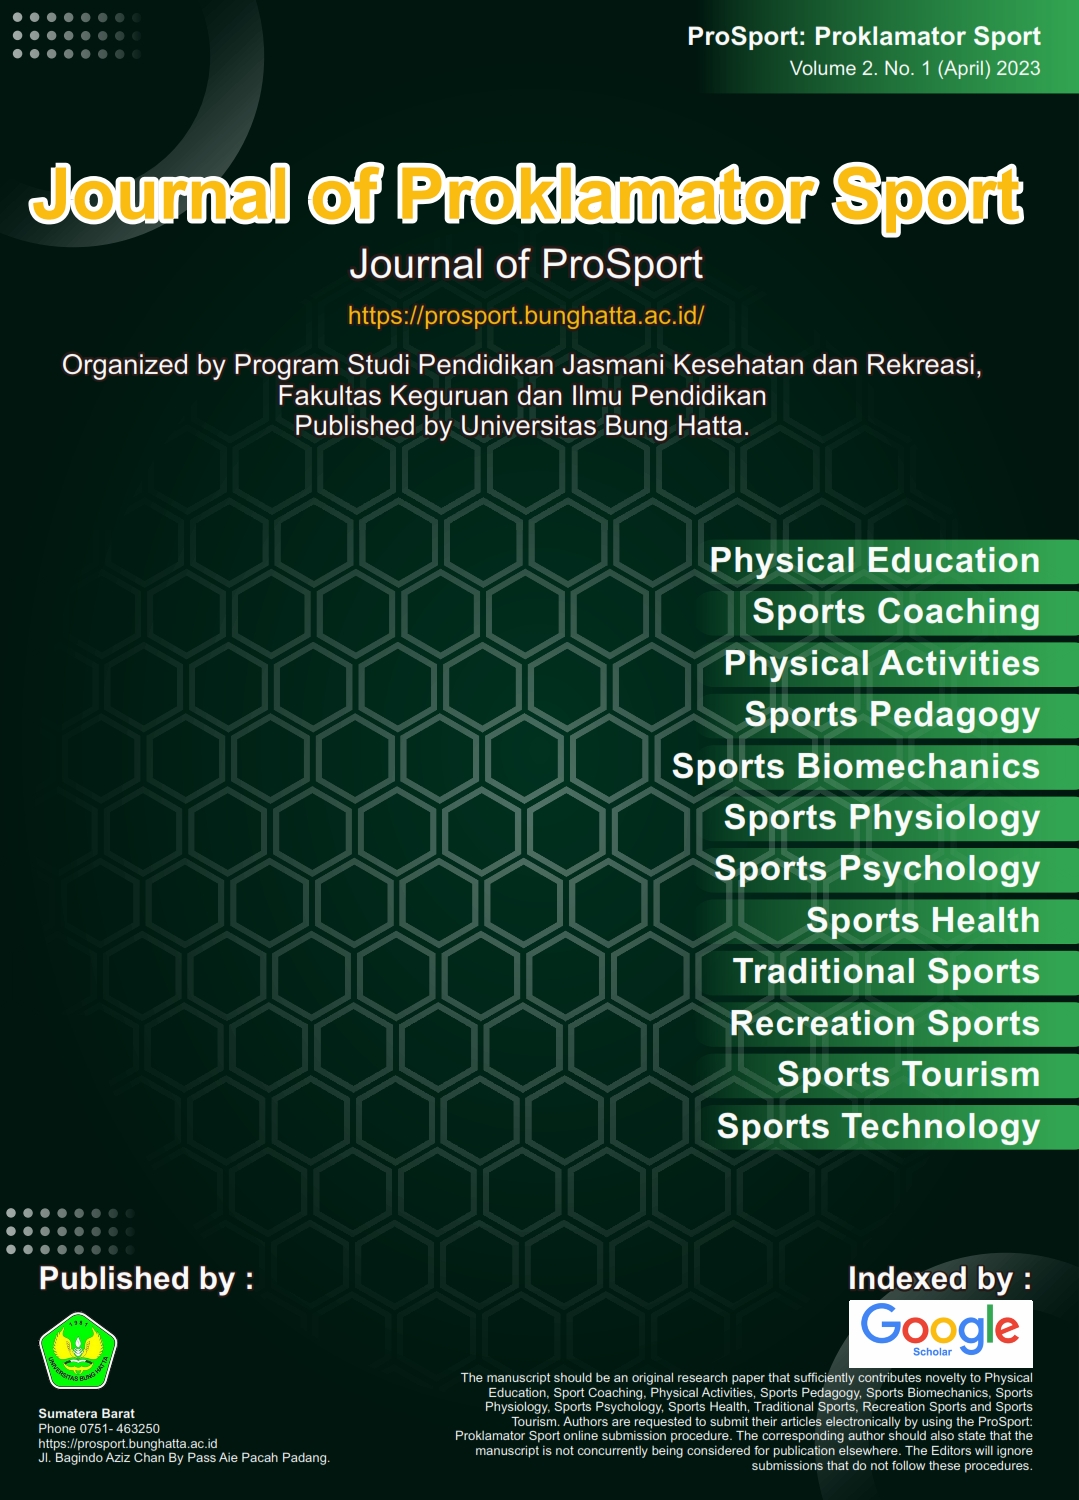 ProSport: Proklamator Sport, Vol 2, No 1 April (2023)